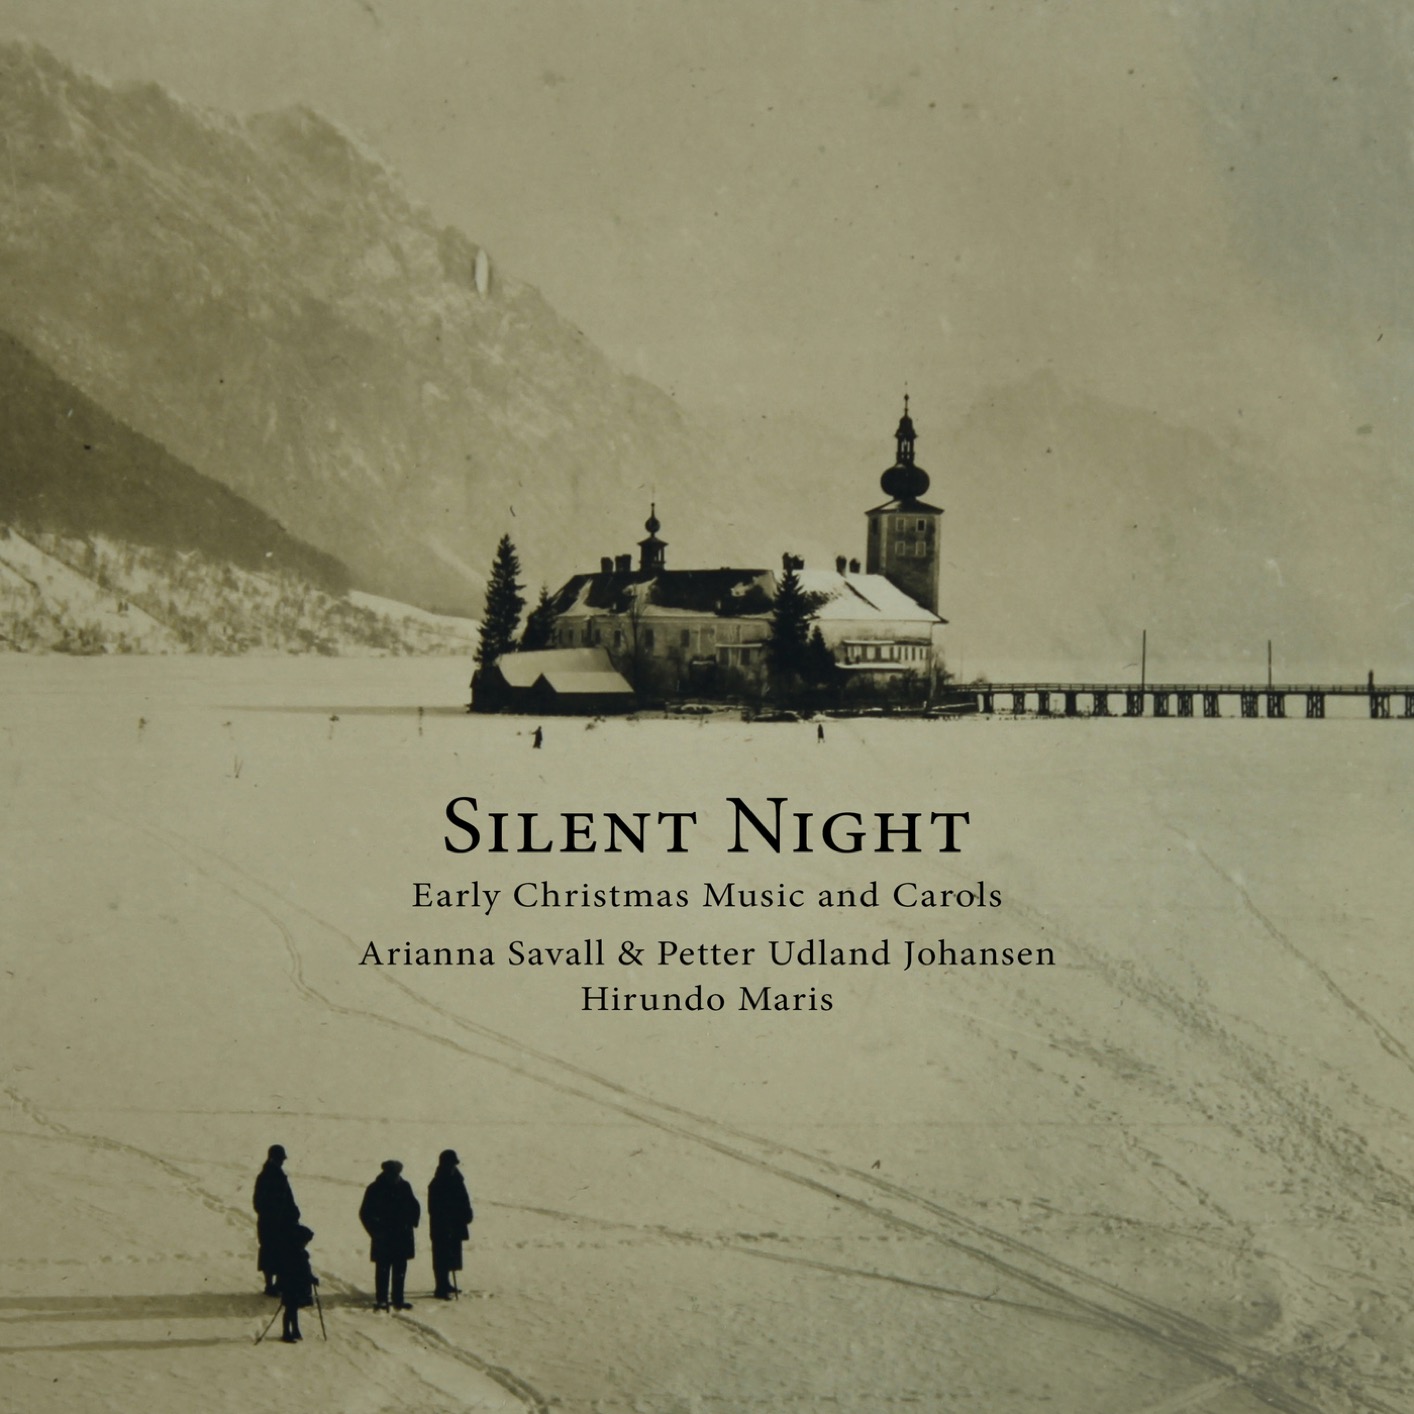 Arianna Savall & Petter Udland Johansen - Silent Night - Early Christmas Music and Carols (2018) [FLAC 24bit/96kHz]